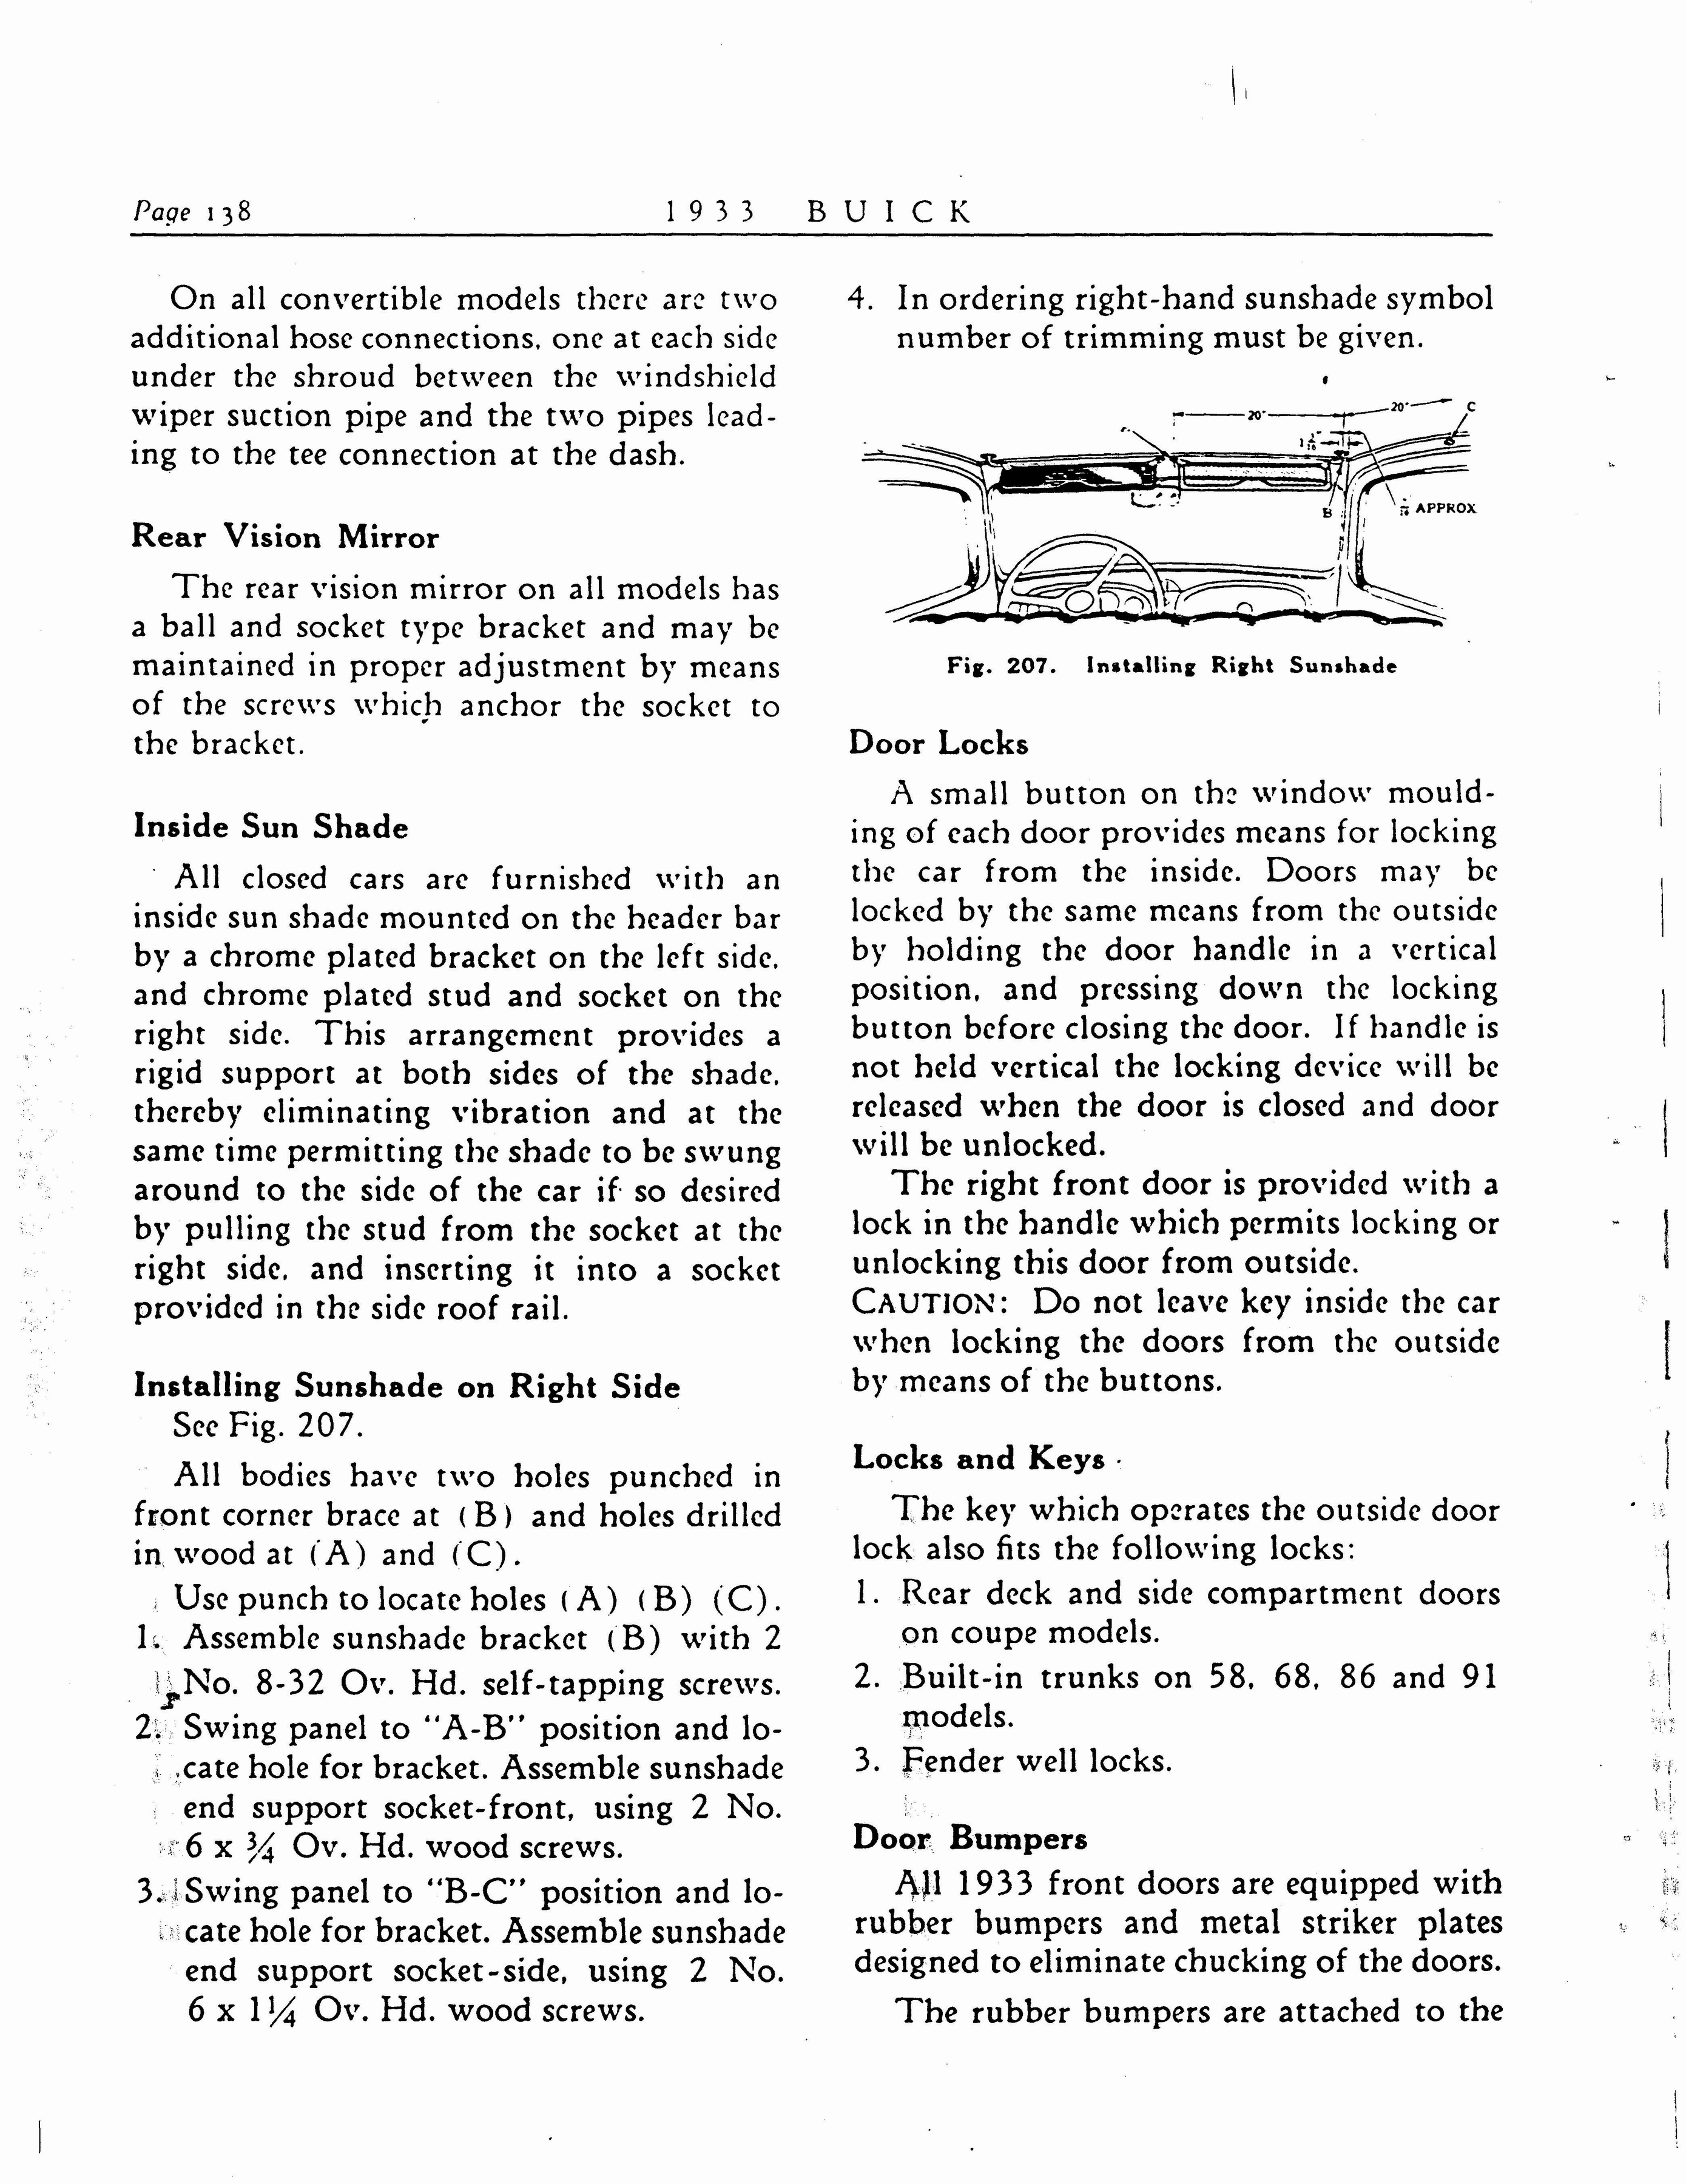 n_1933 Buick Shop Manual_Page_139.jpg